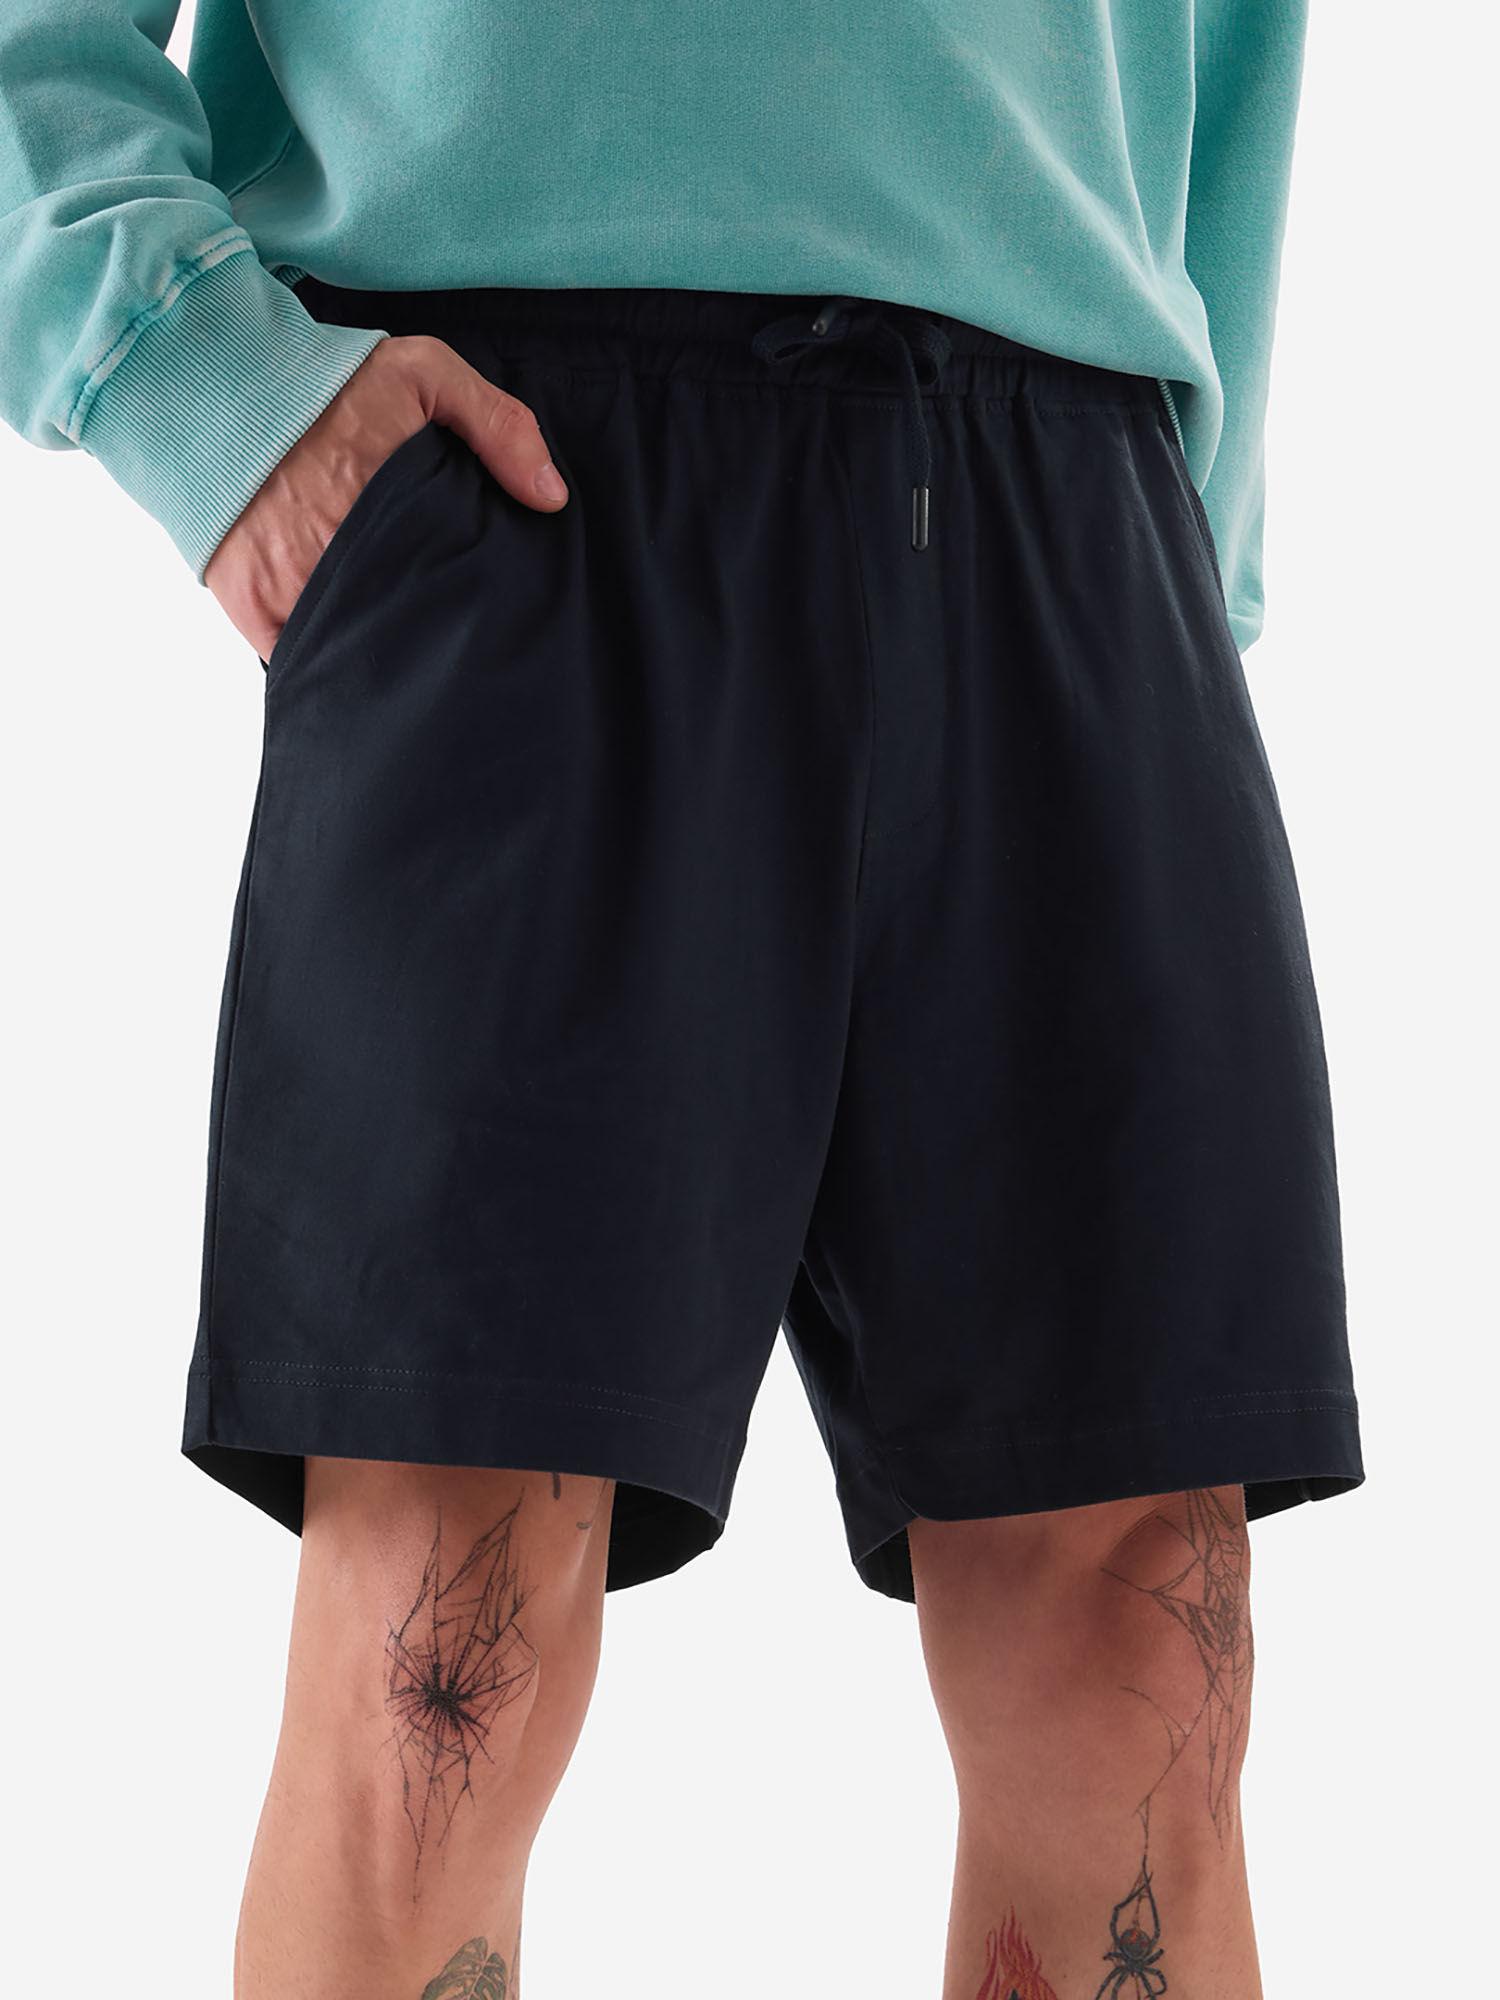 original home shorts : navy blue men home shorts